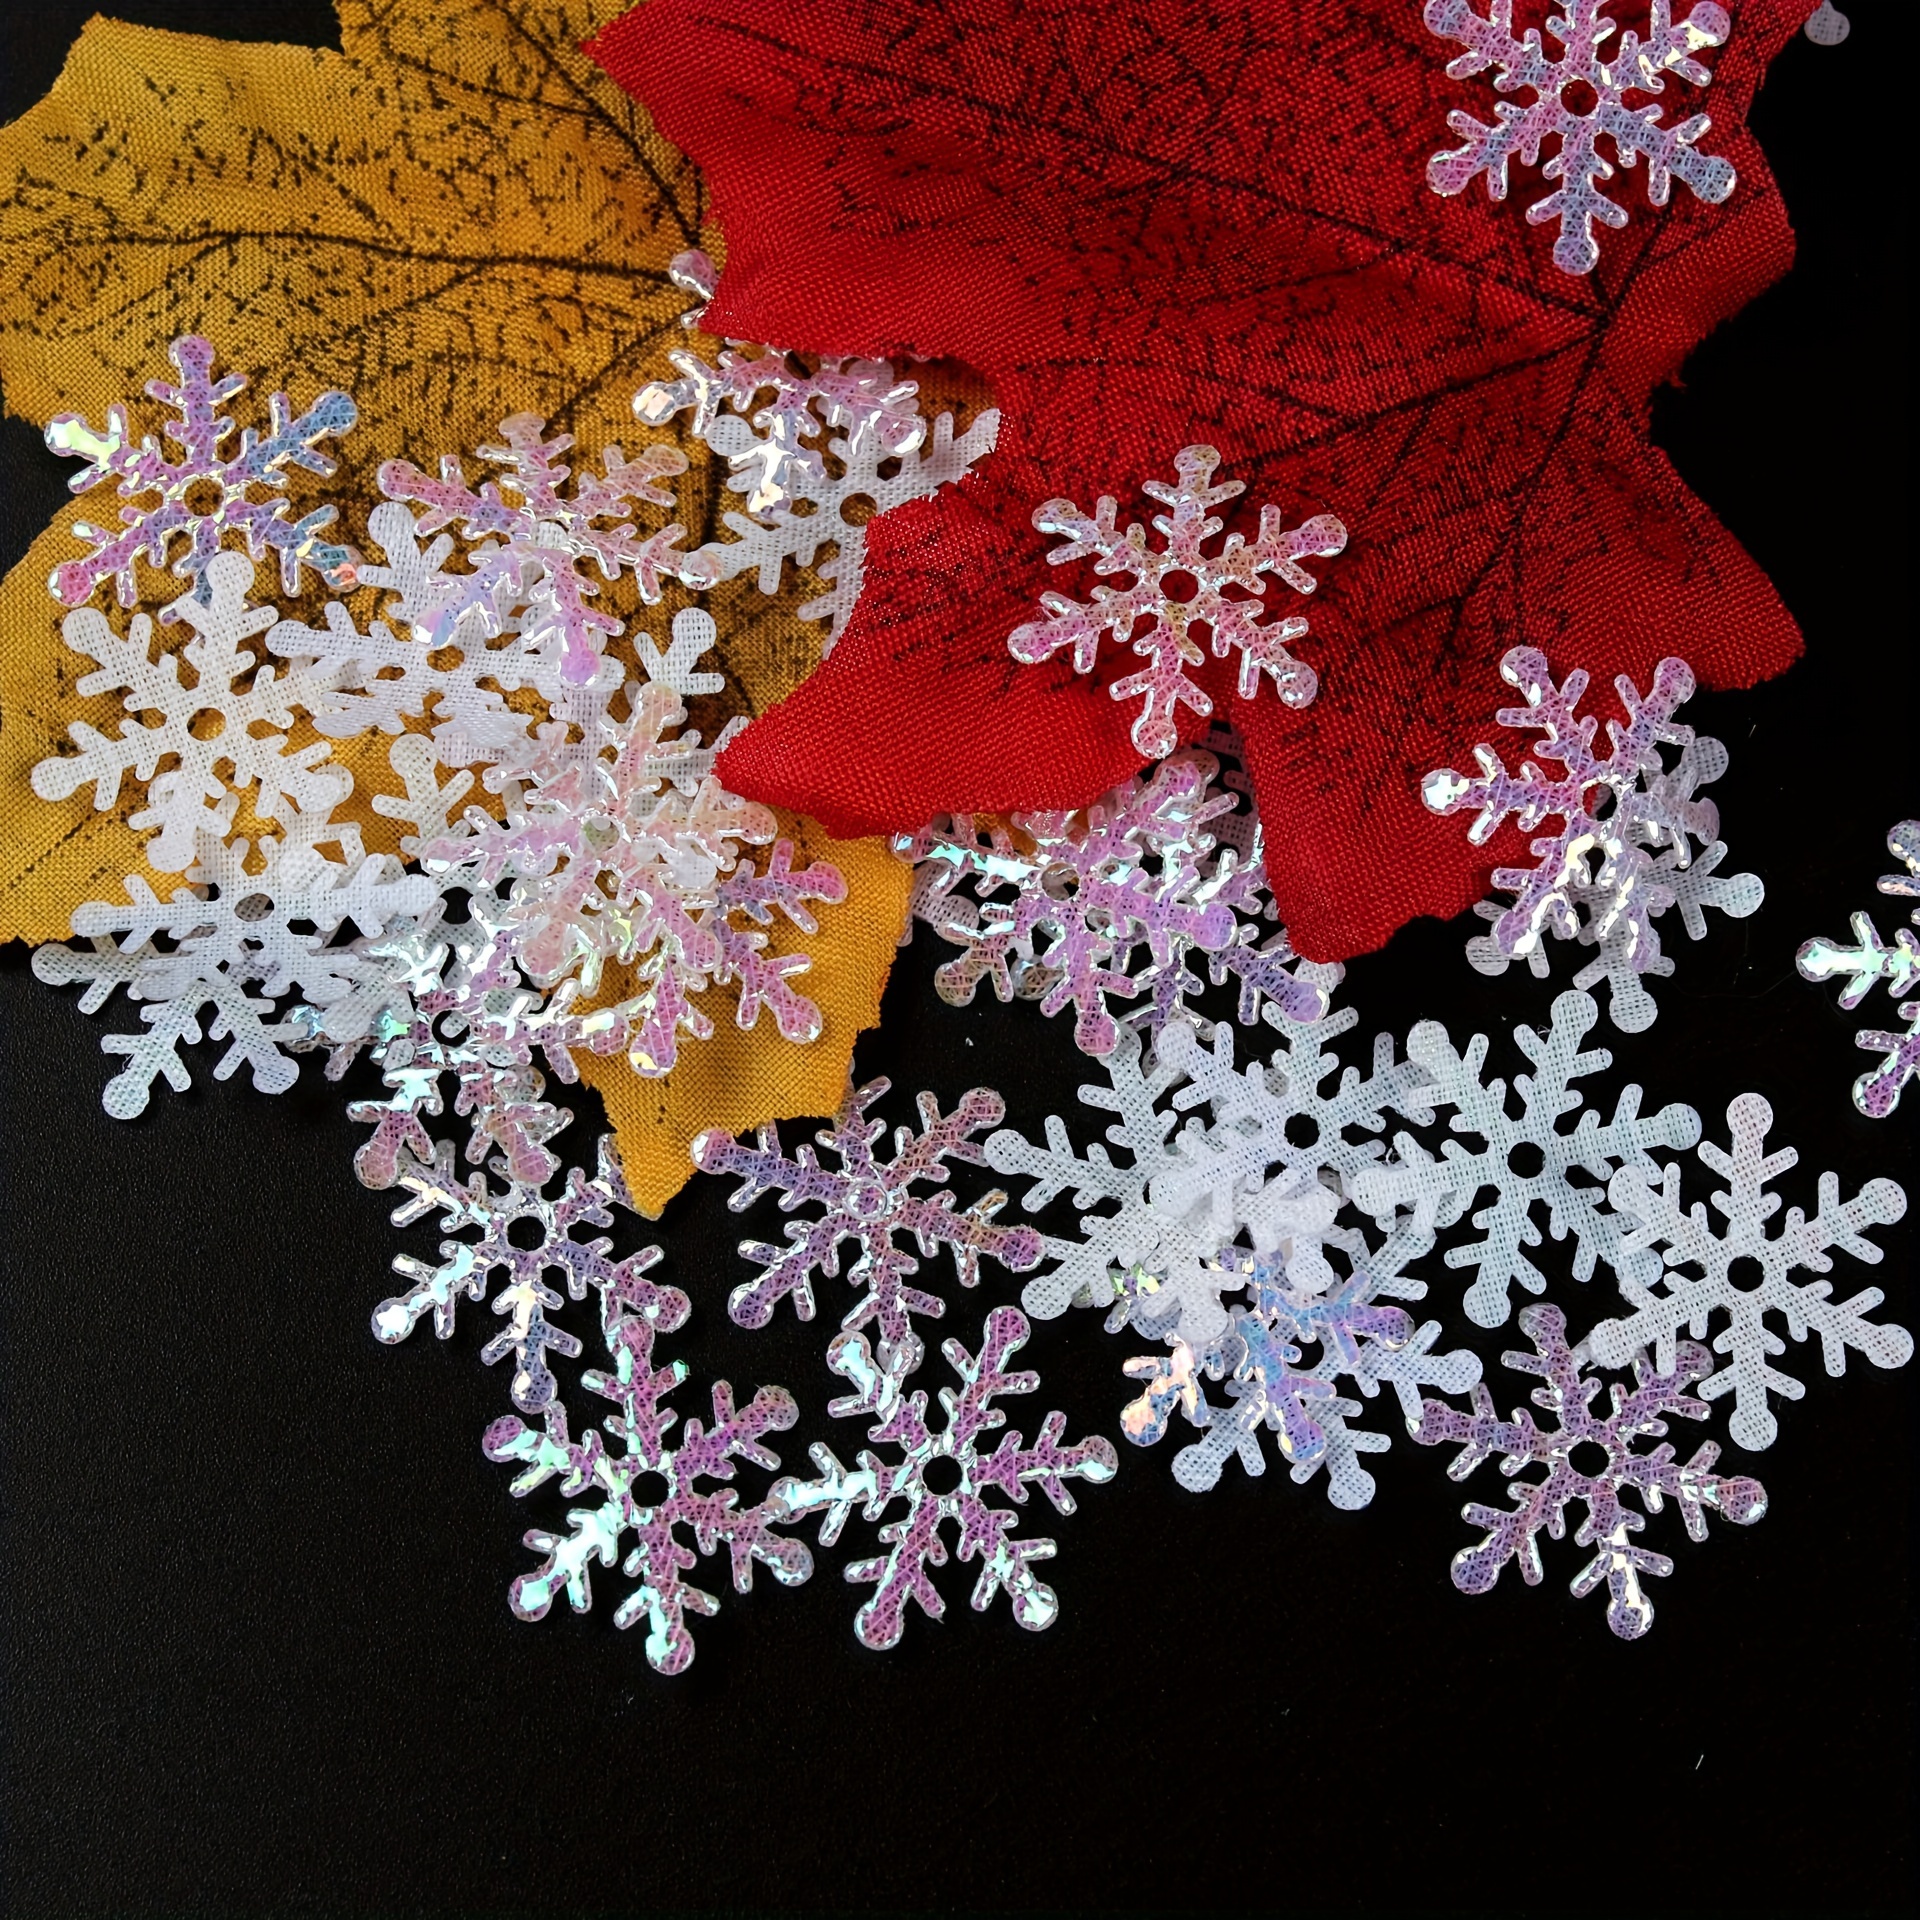  200Pcs Snowflakes Confetti Decorations for Winter